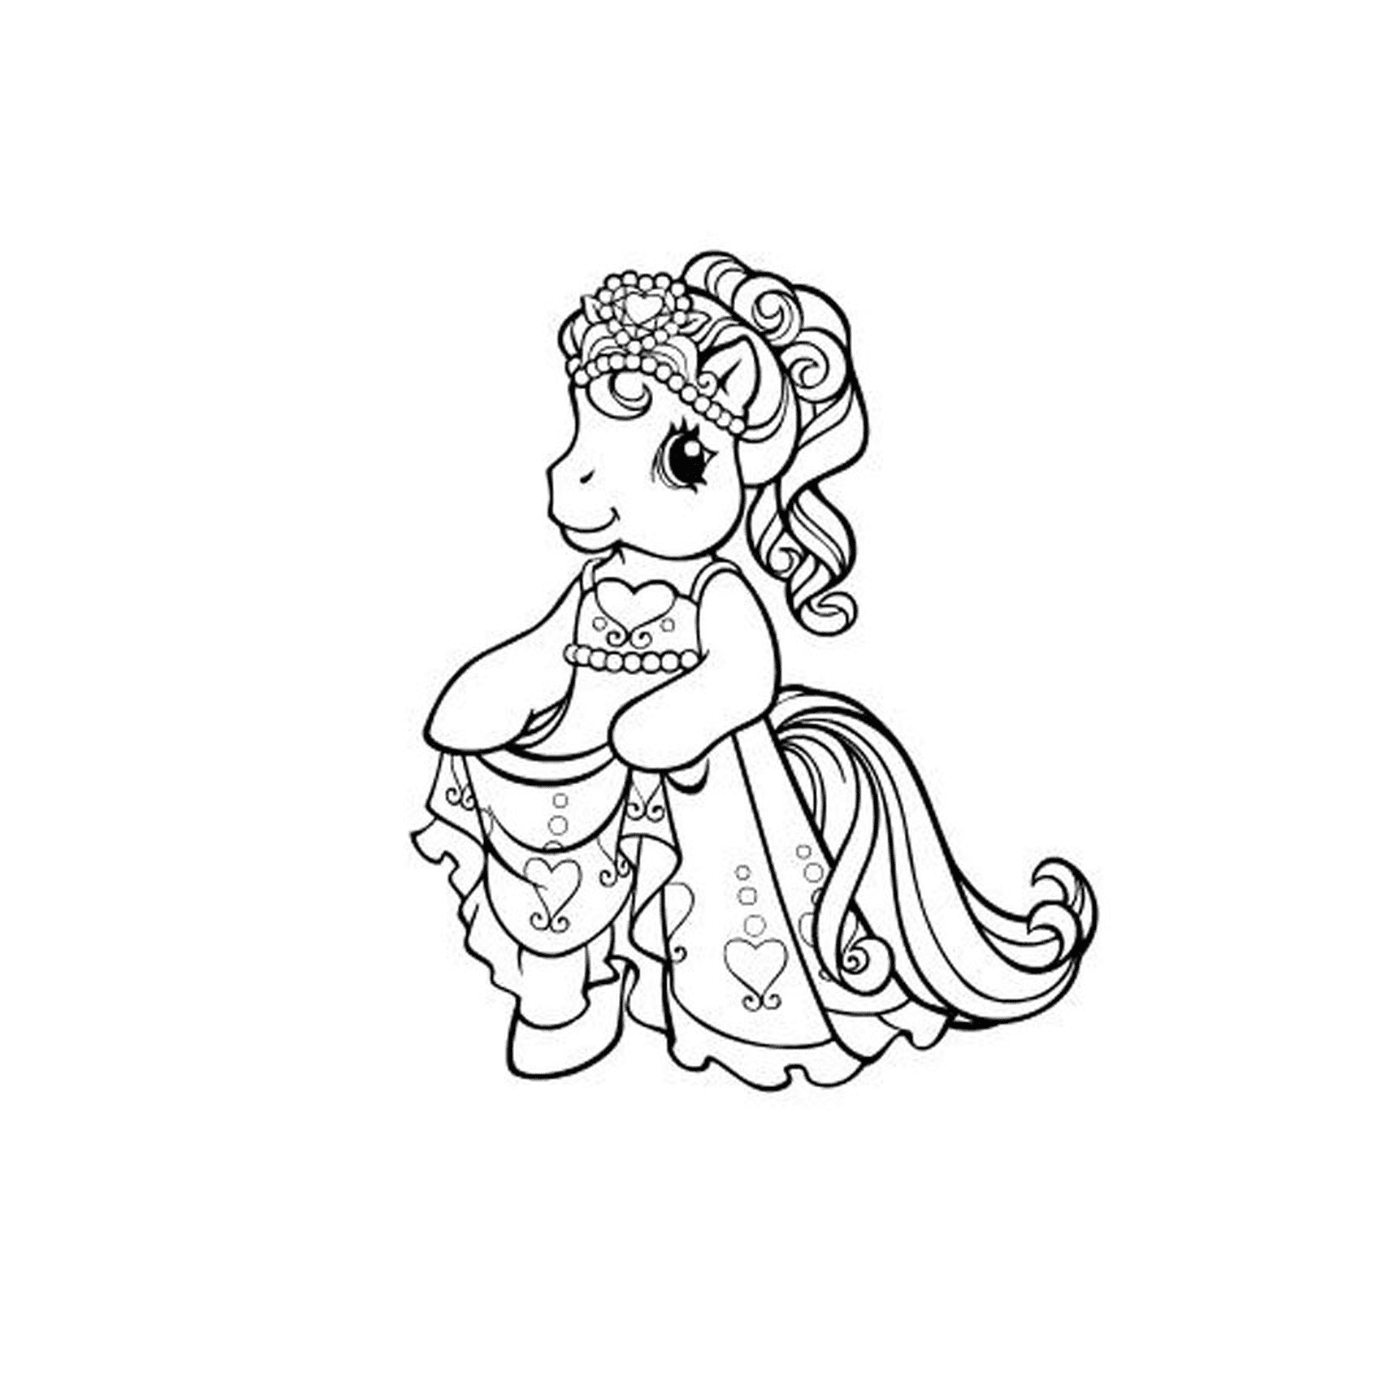  Little girl in princess dress 